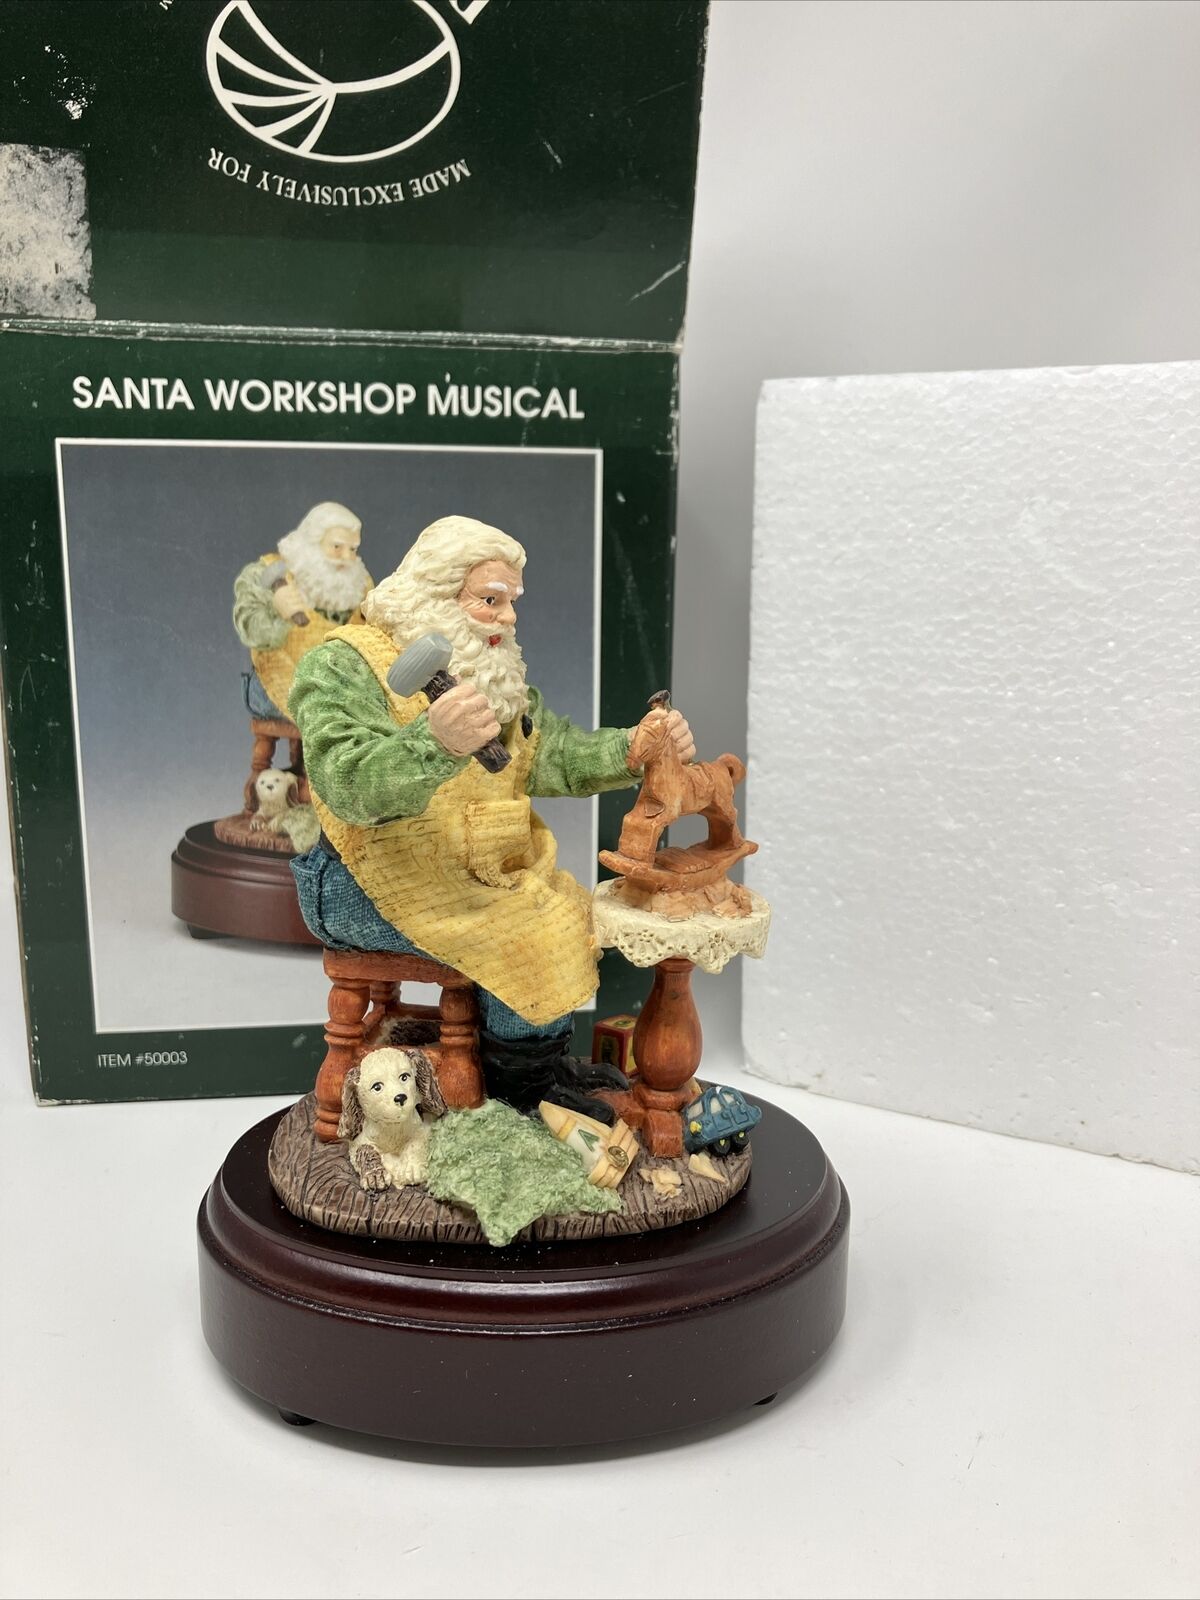 1995 Pacific Rim Santa Workshop Music Box With Box Item #50003